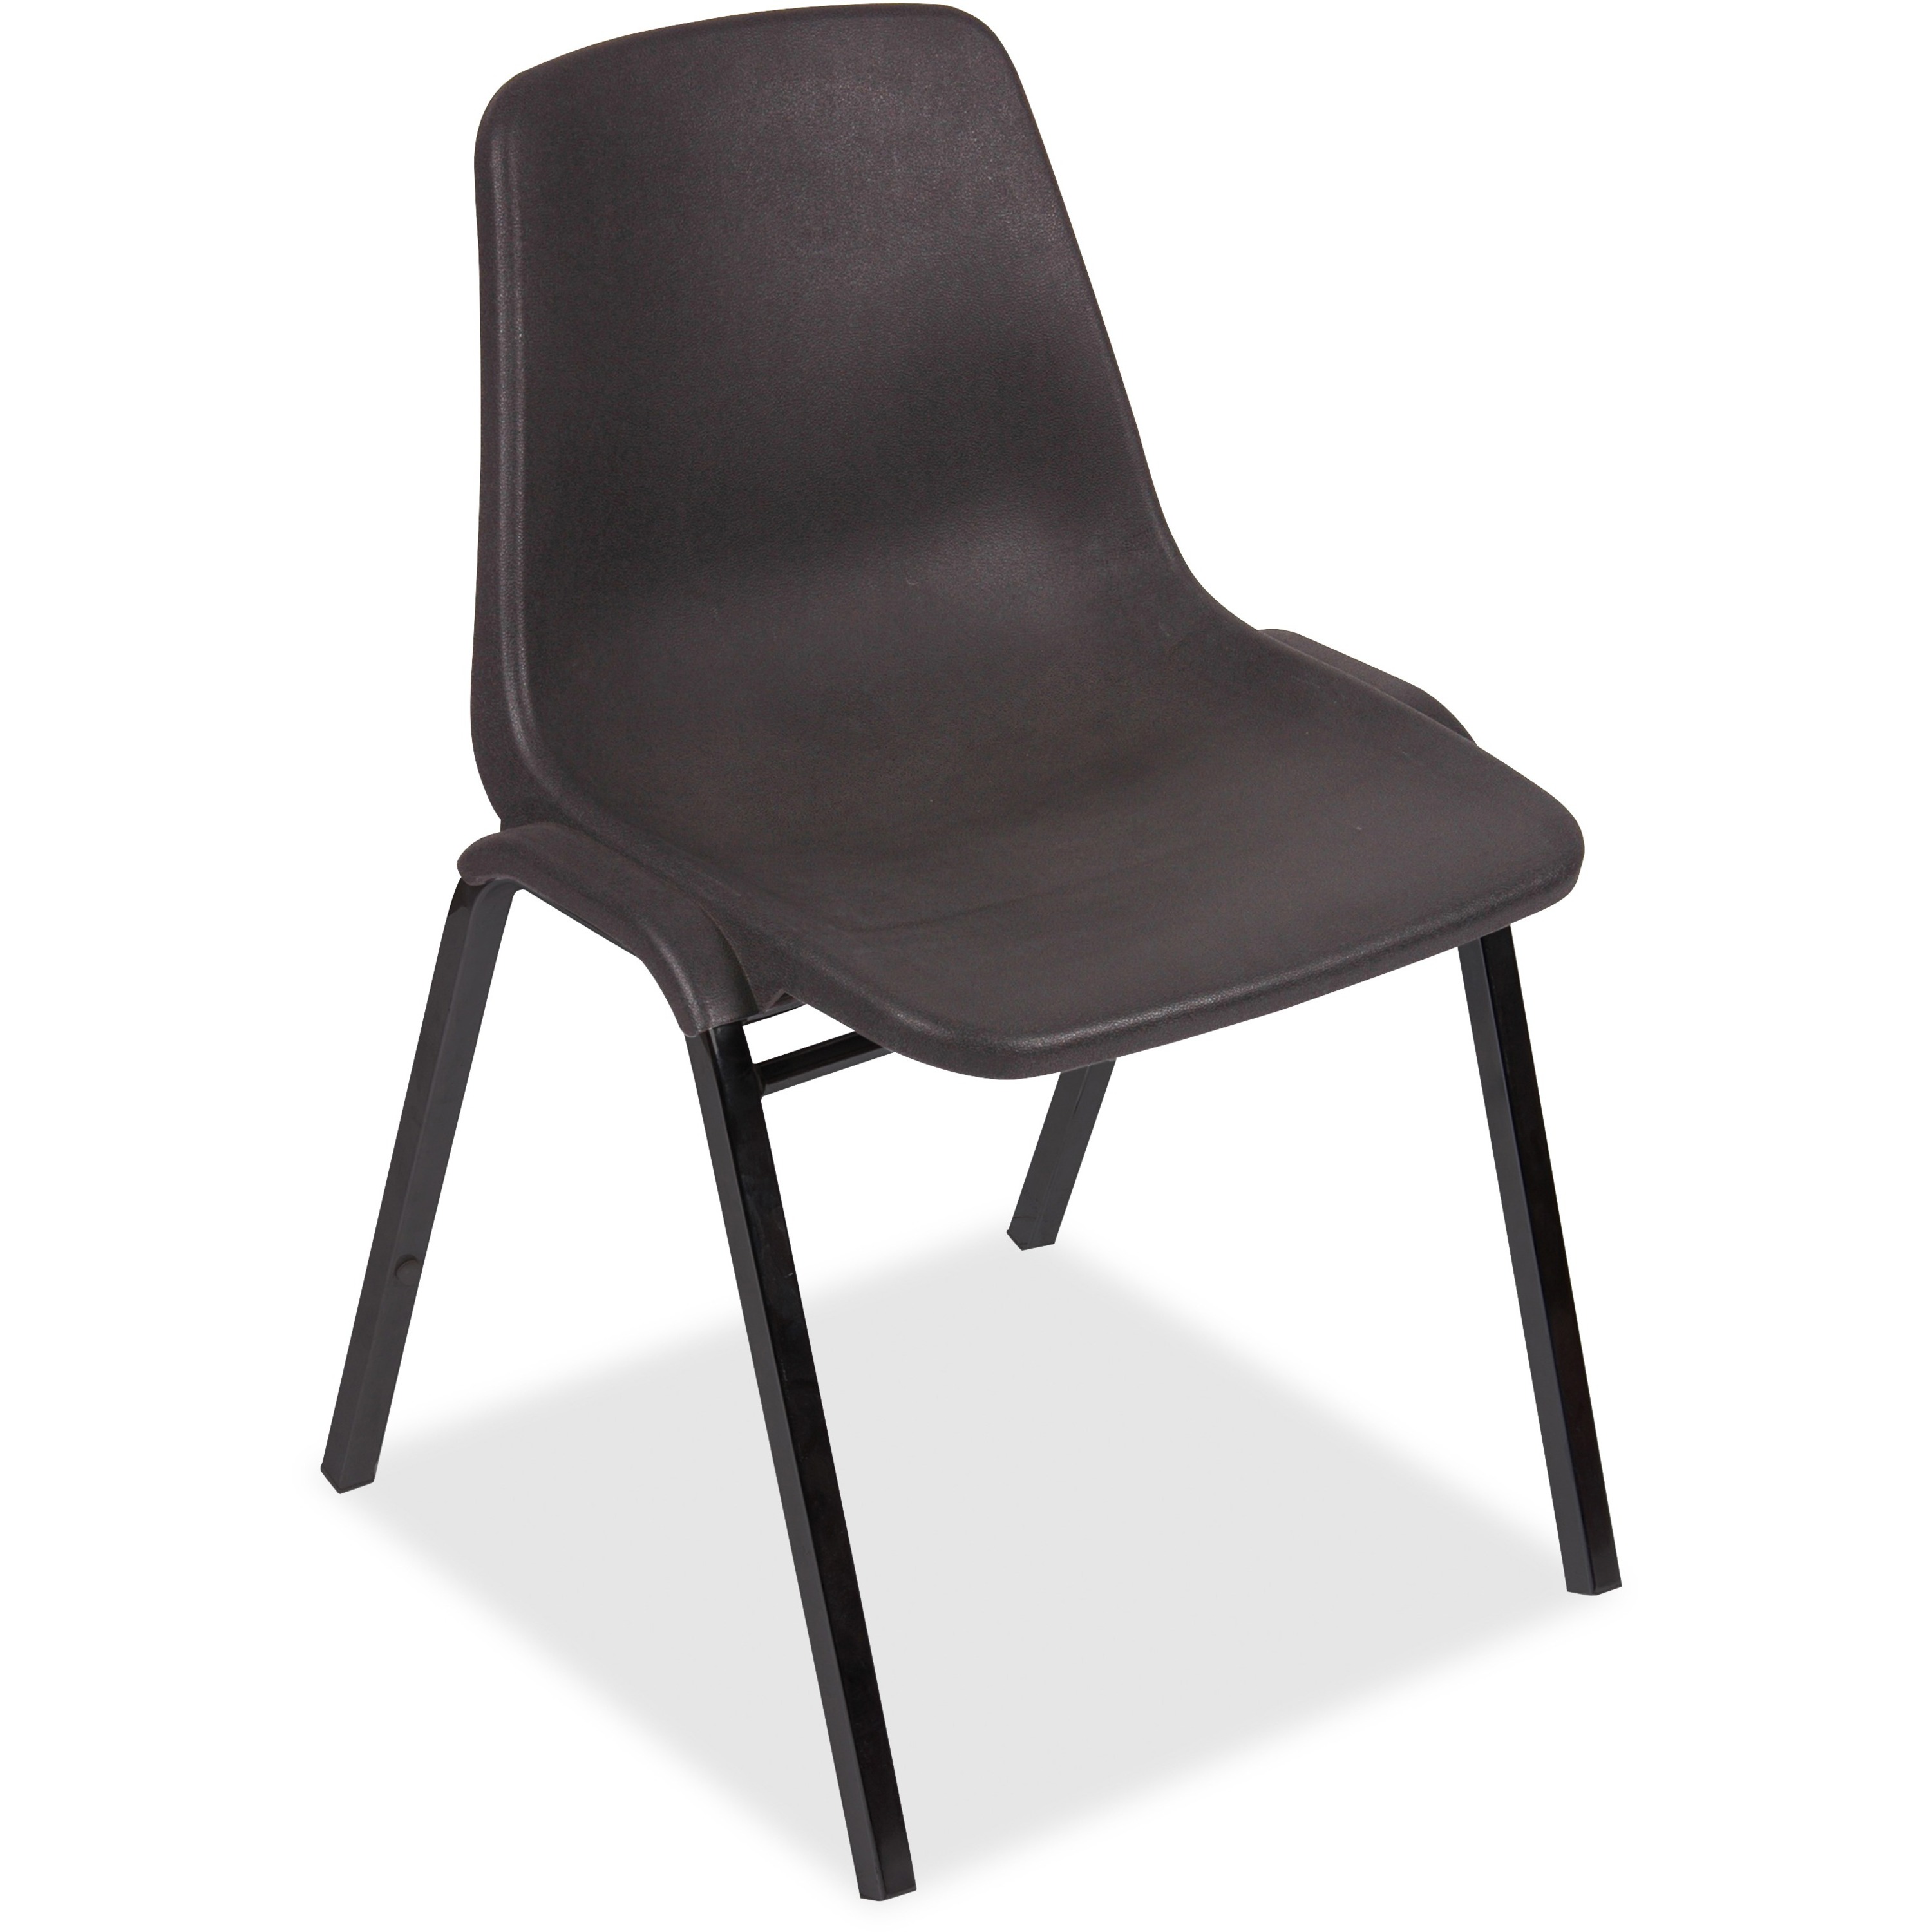 Challenge Industries Ltd. :: Furniture :: Chairs, Chair Mats